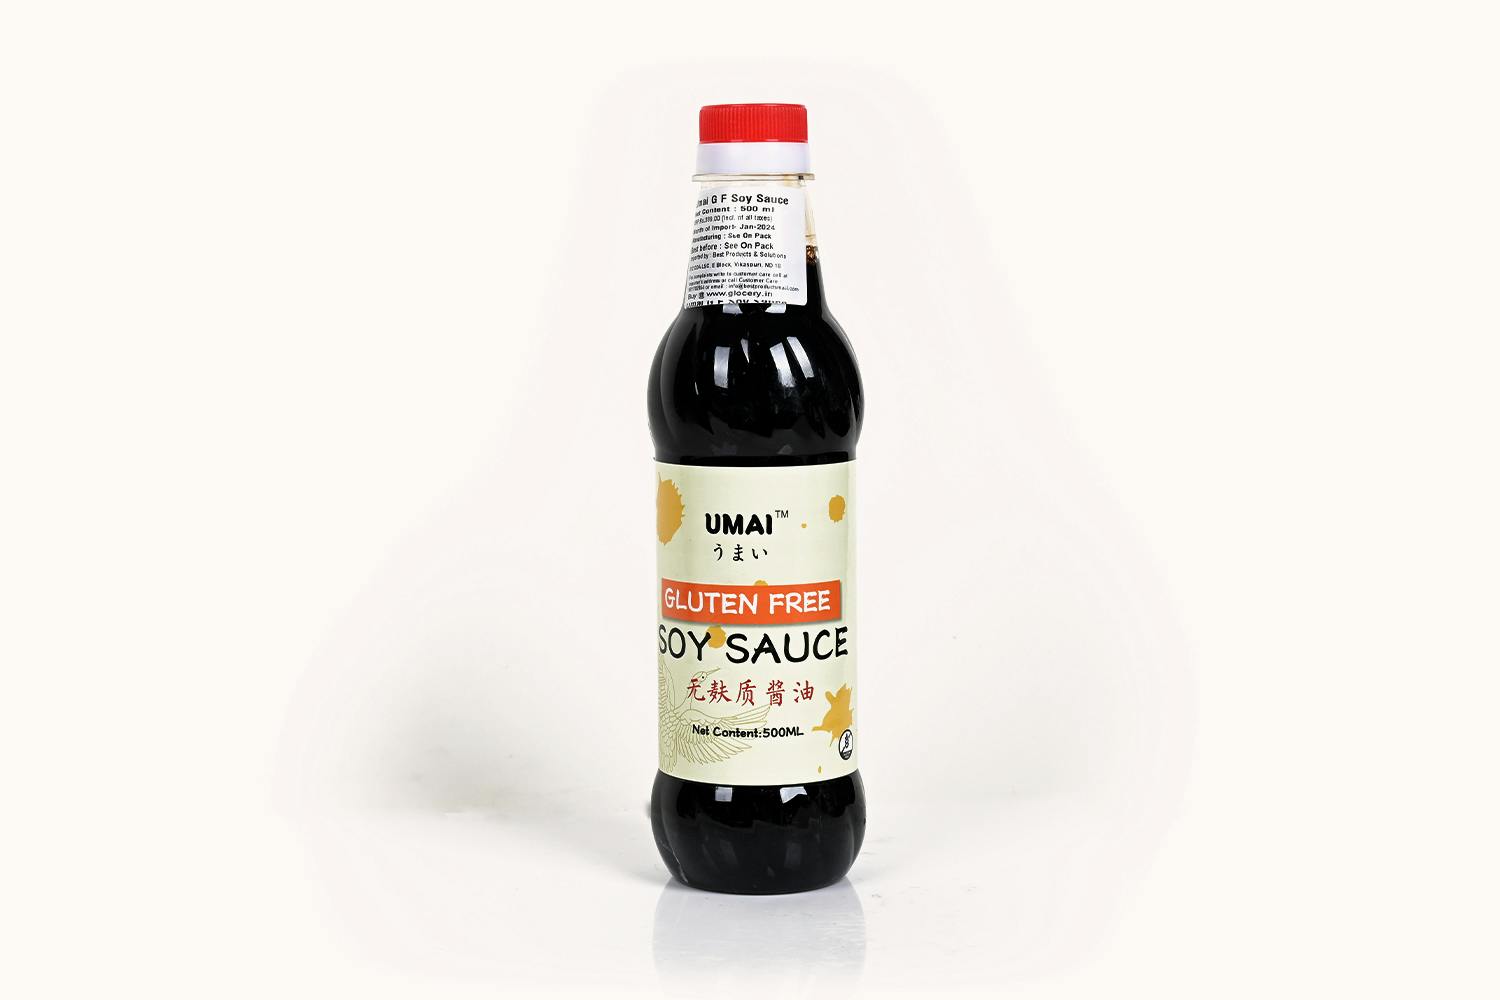 UMAI Gluten Free Soy Sauce